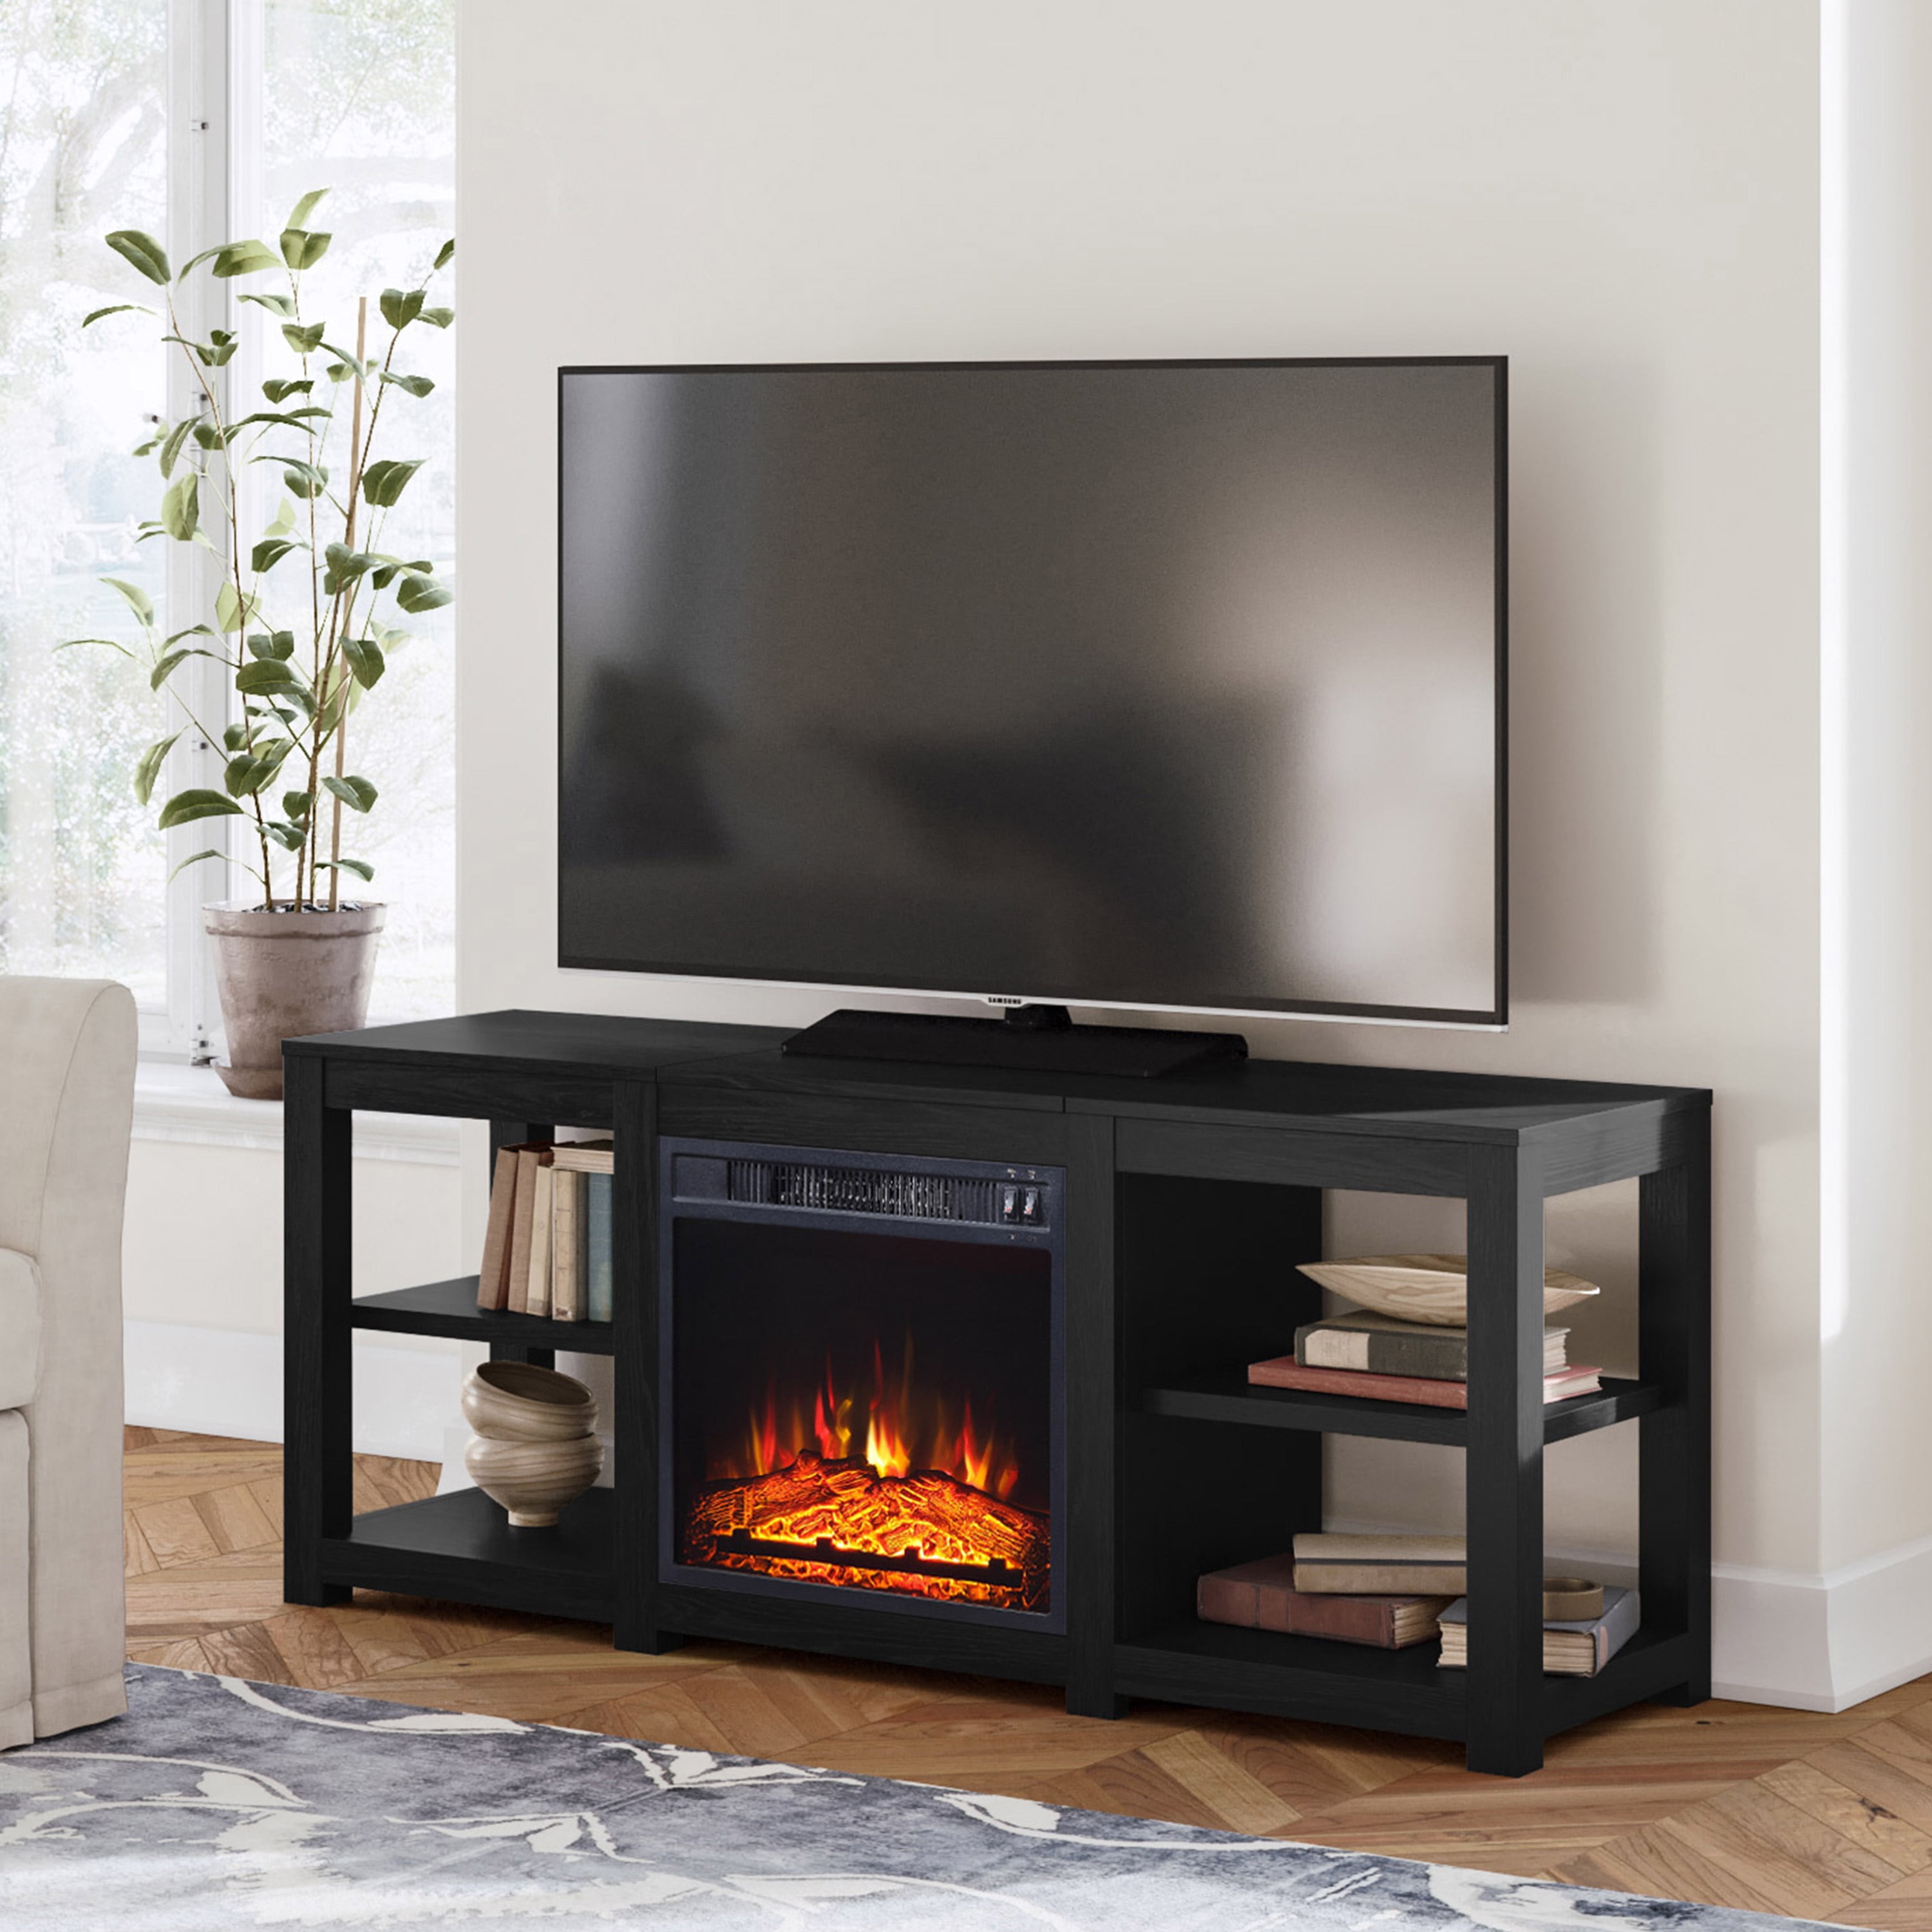 Mainstays Fireplace TV Stand for TVs up to 65" for sale online 8620335WCOM Black Oak 